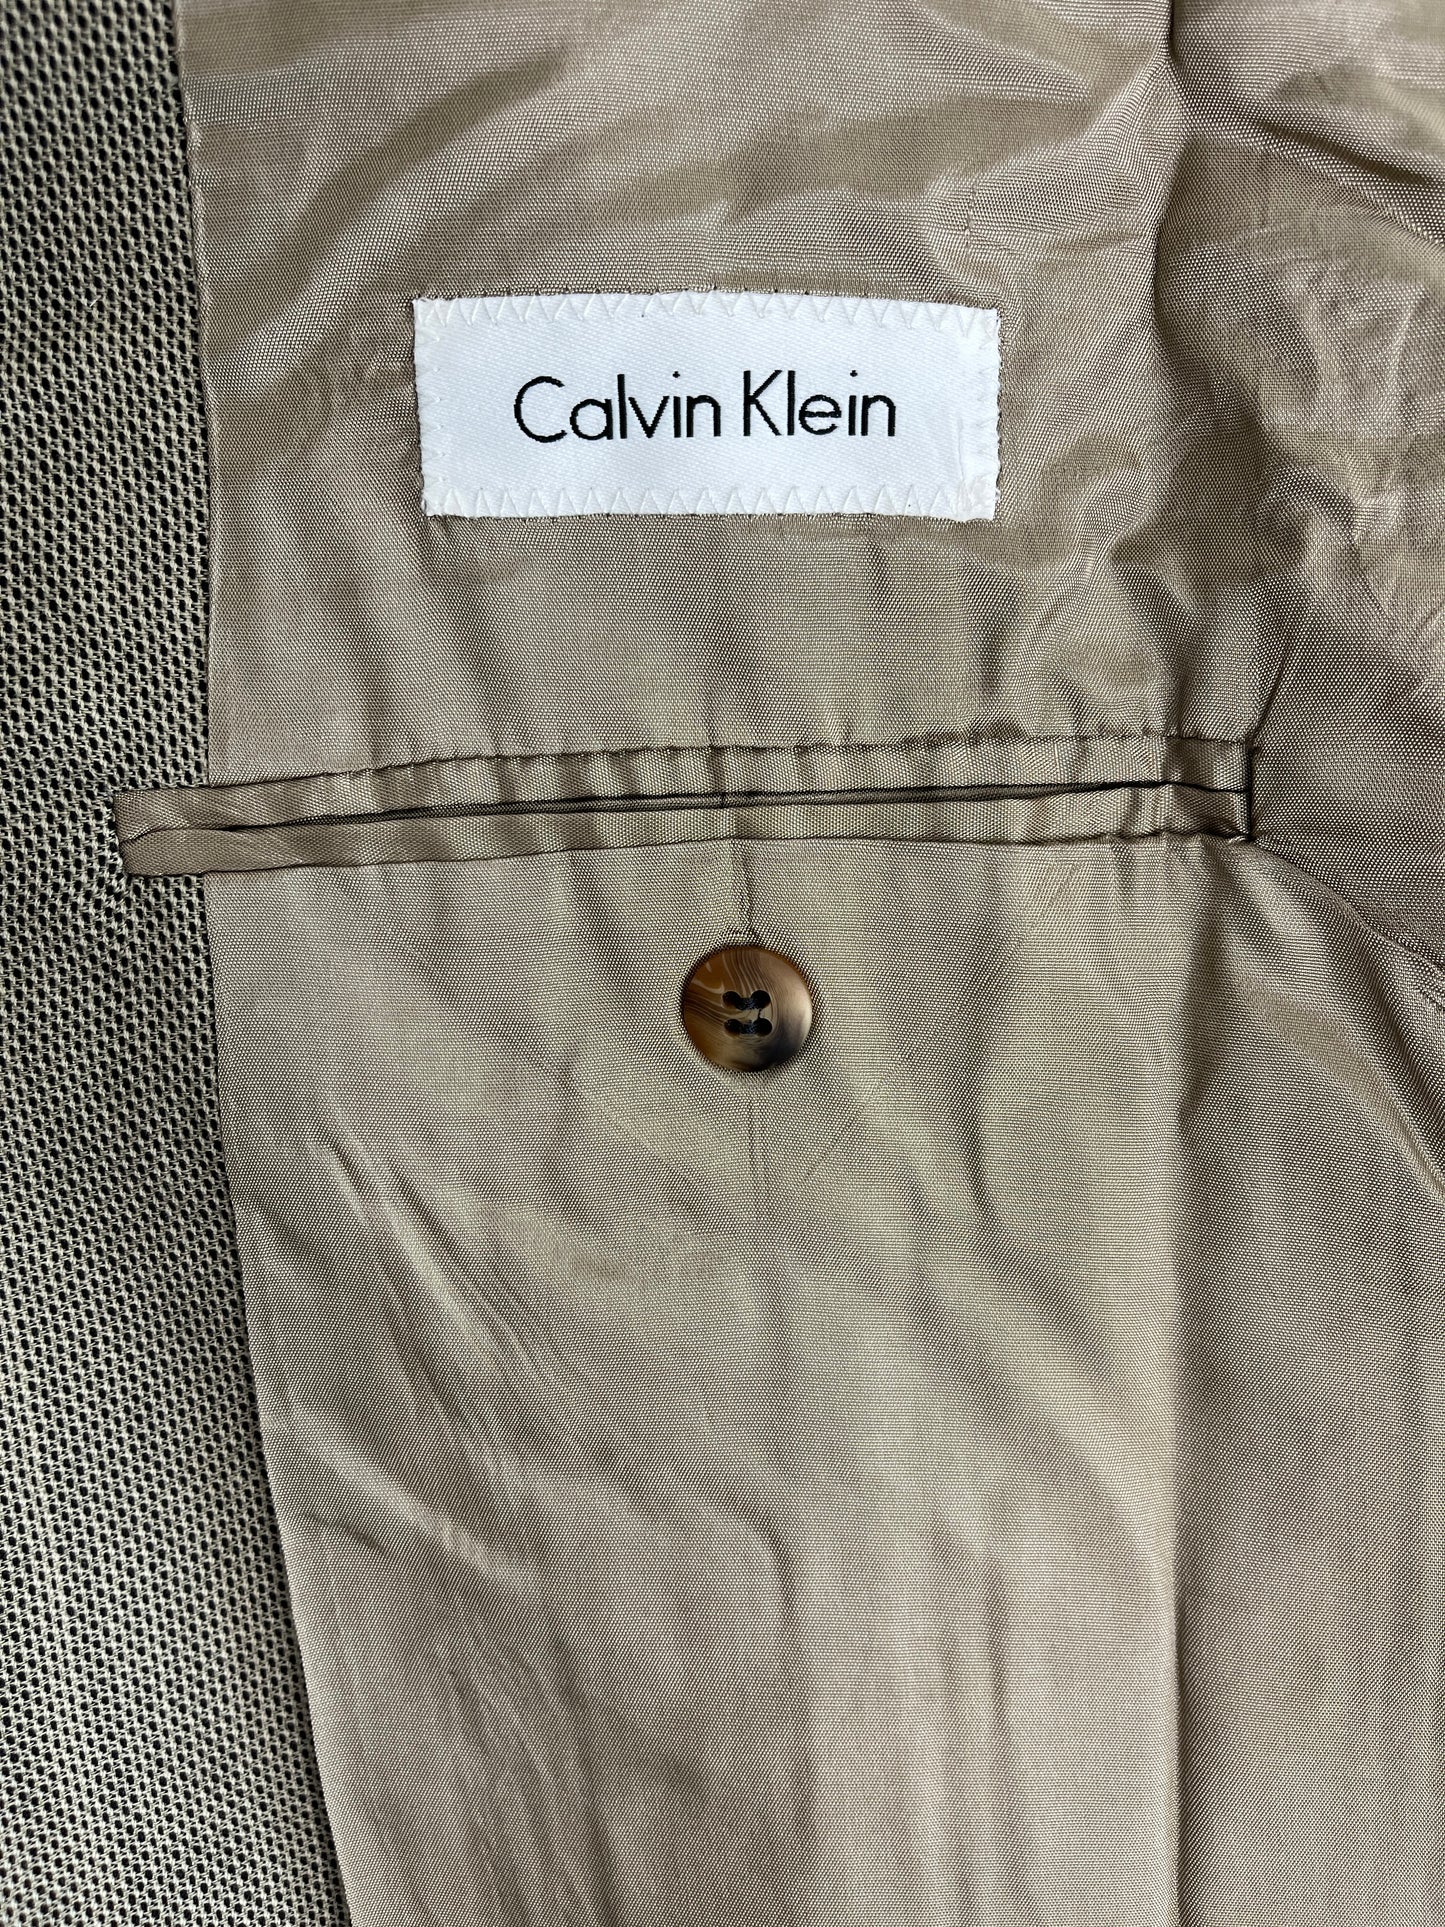 Calvin Klein Men's Jacket Tan Size M SKU 000441